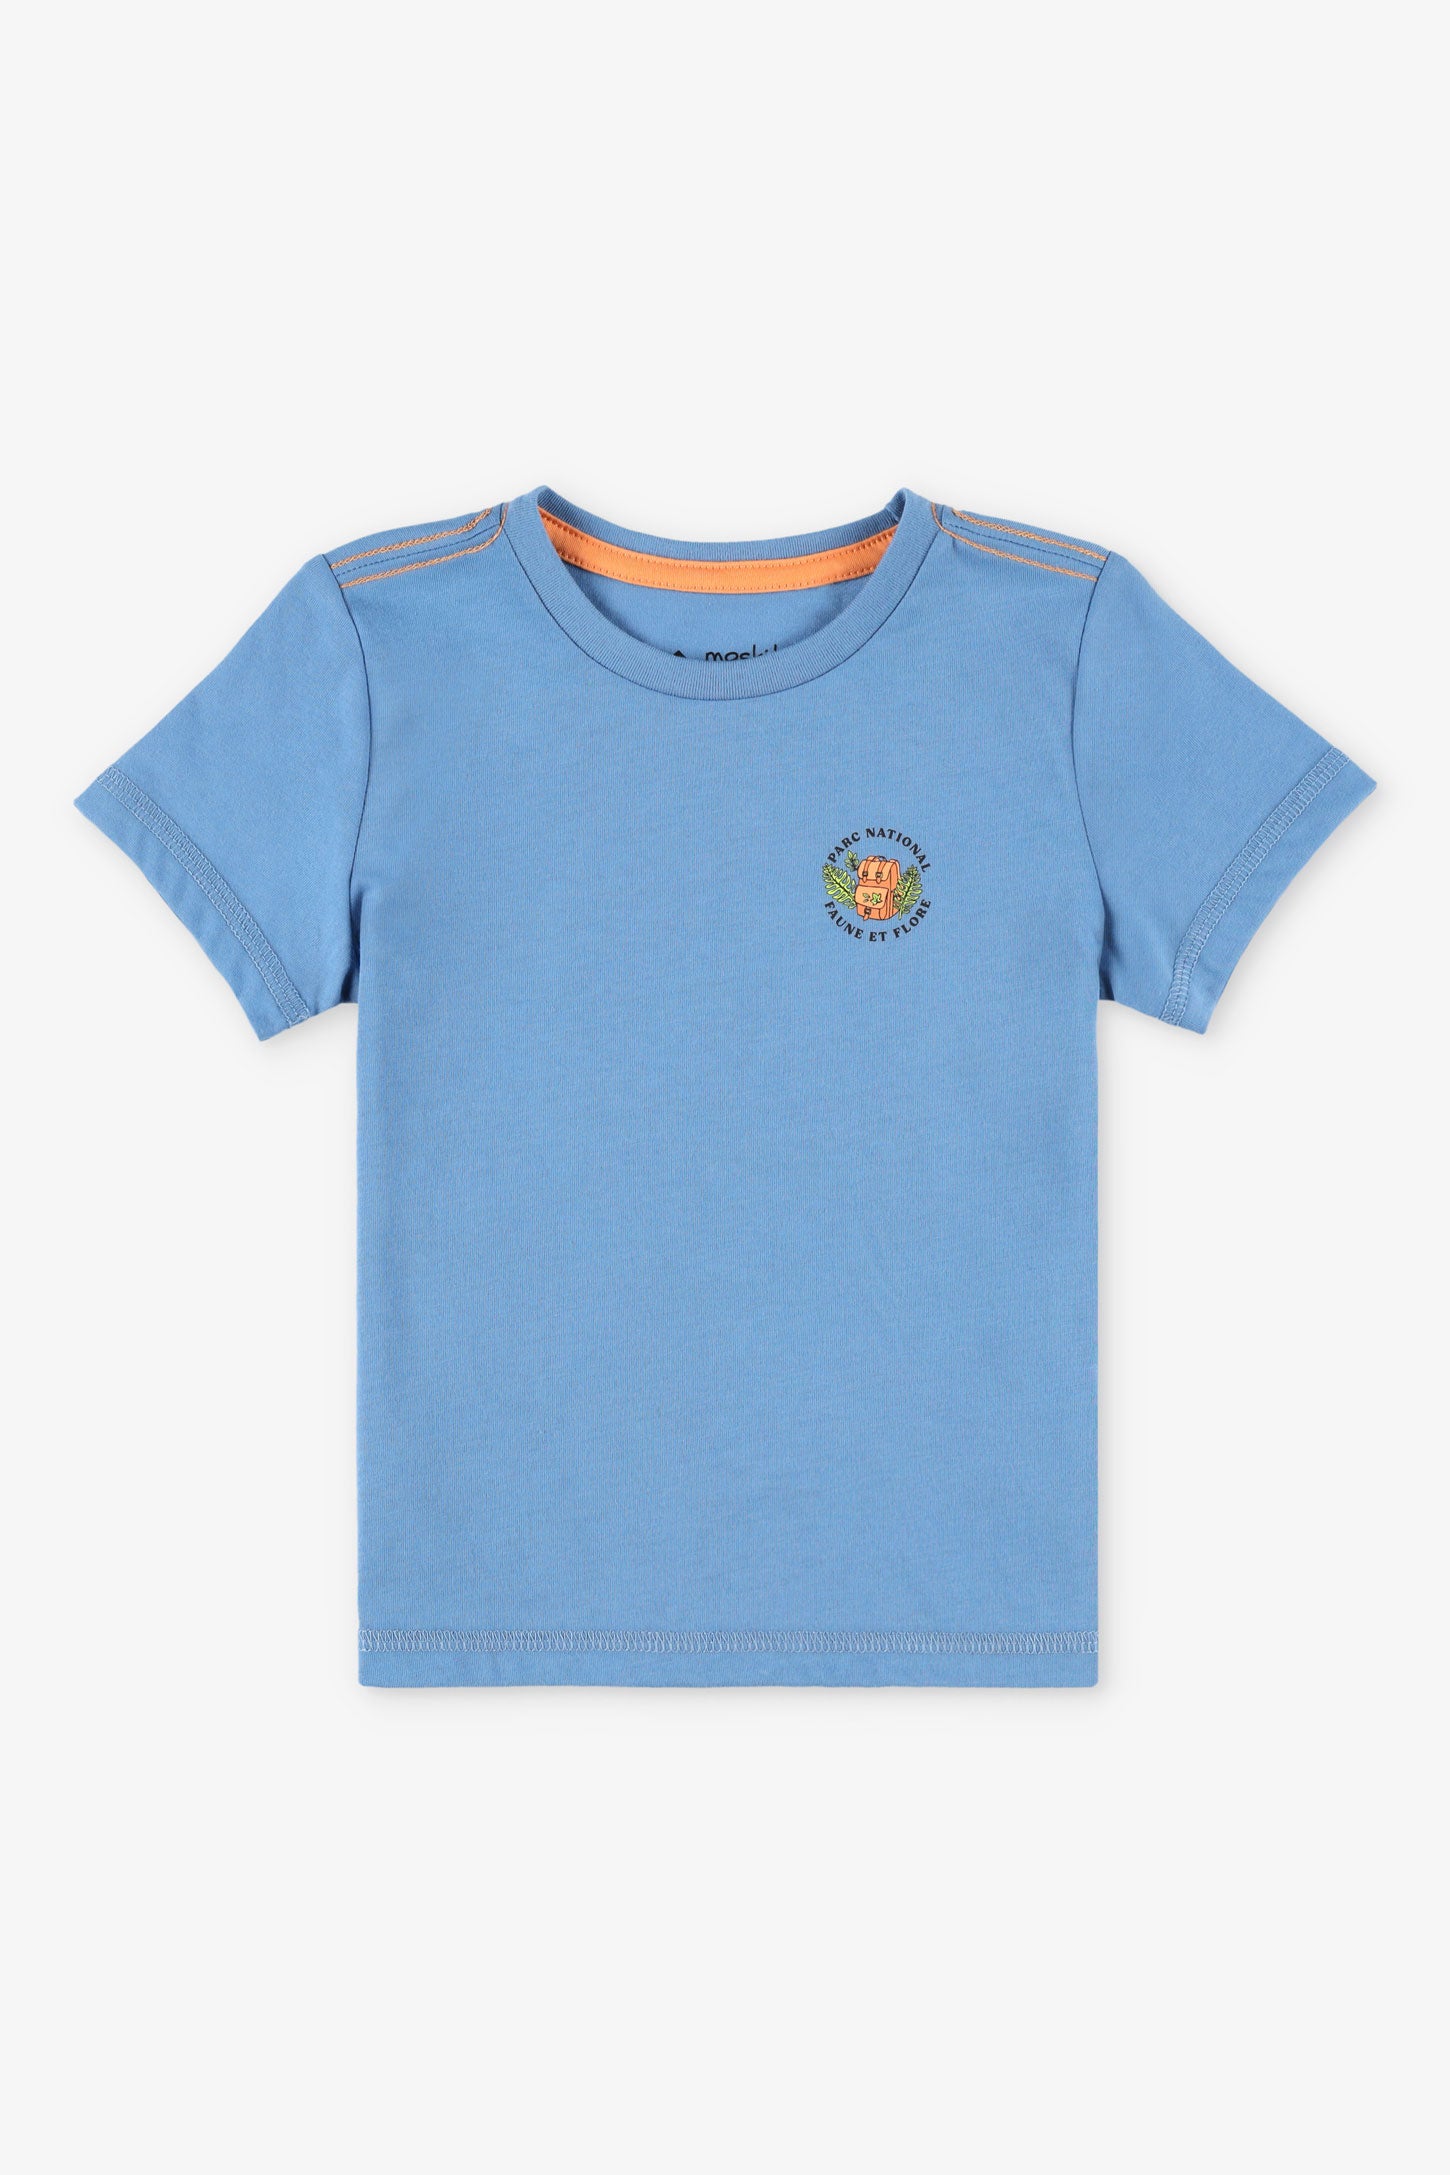 T-shirt col rond coton bio BM, 2/30$ - Enfant garçon && BLEU